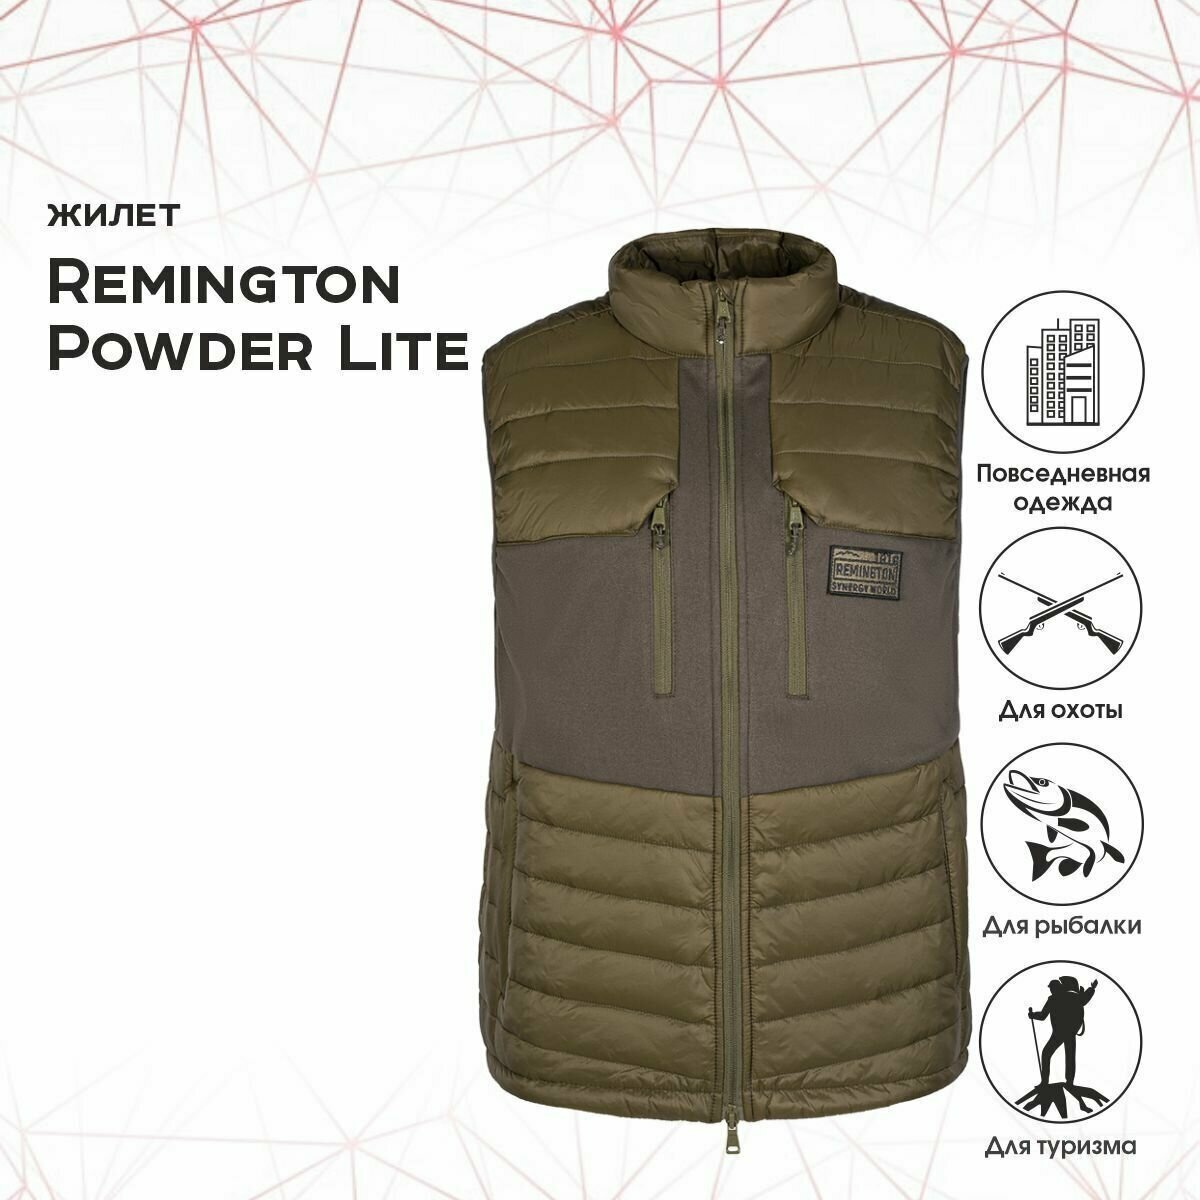 Жилет Remington Powder Lite р. L RM1430-903